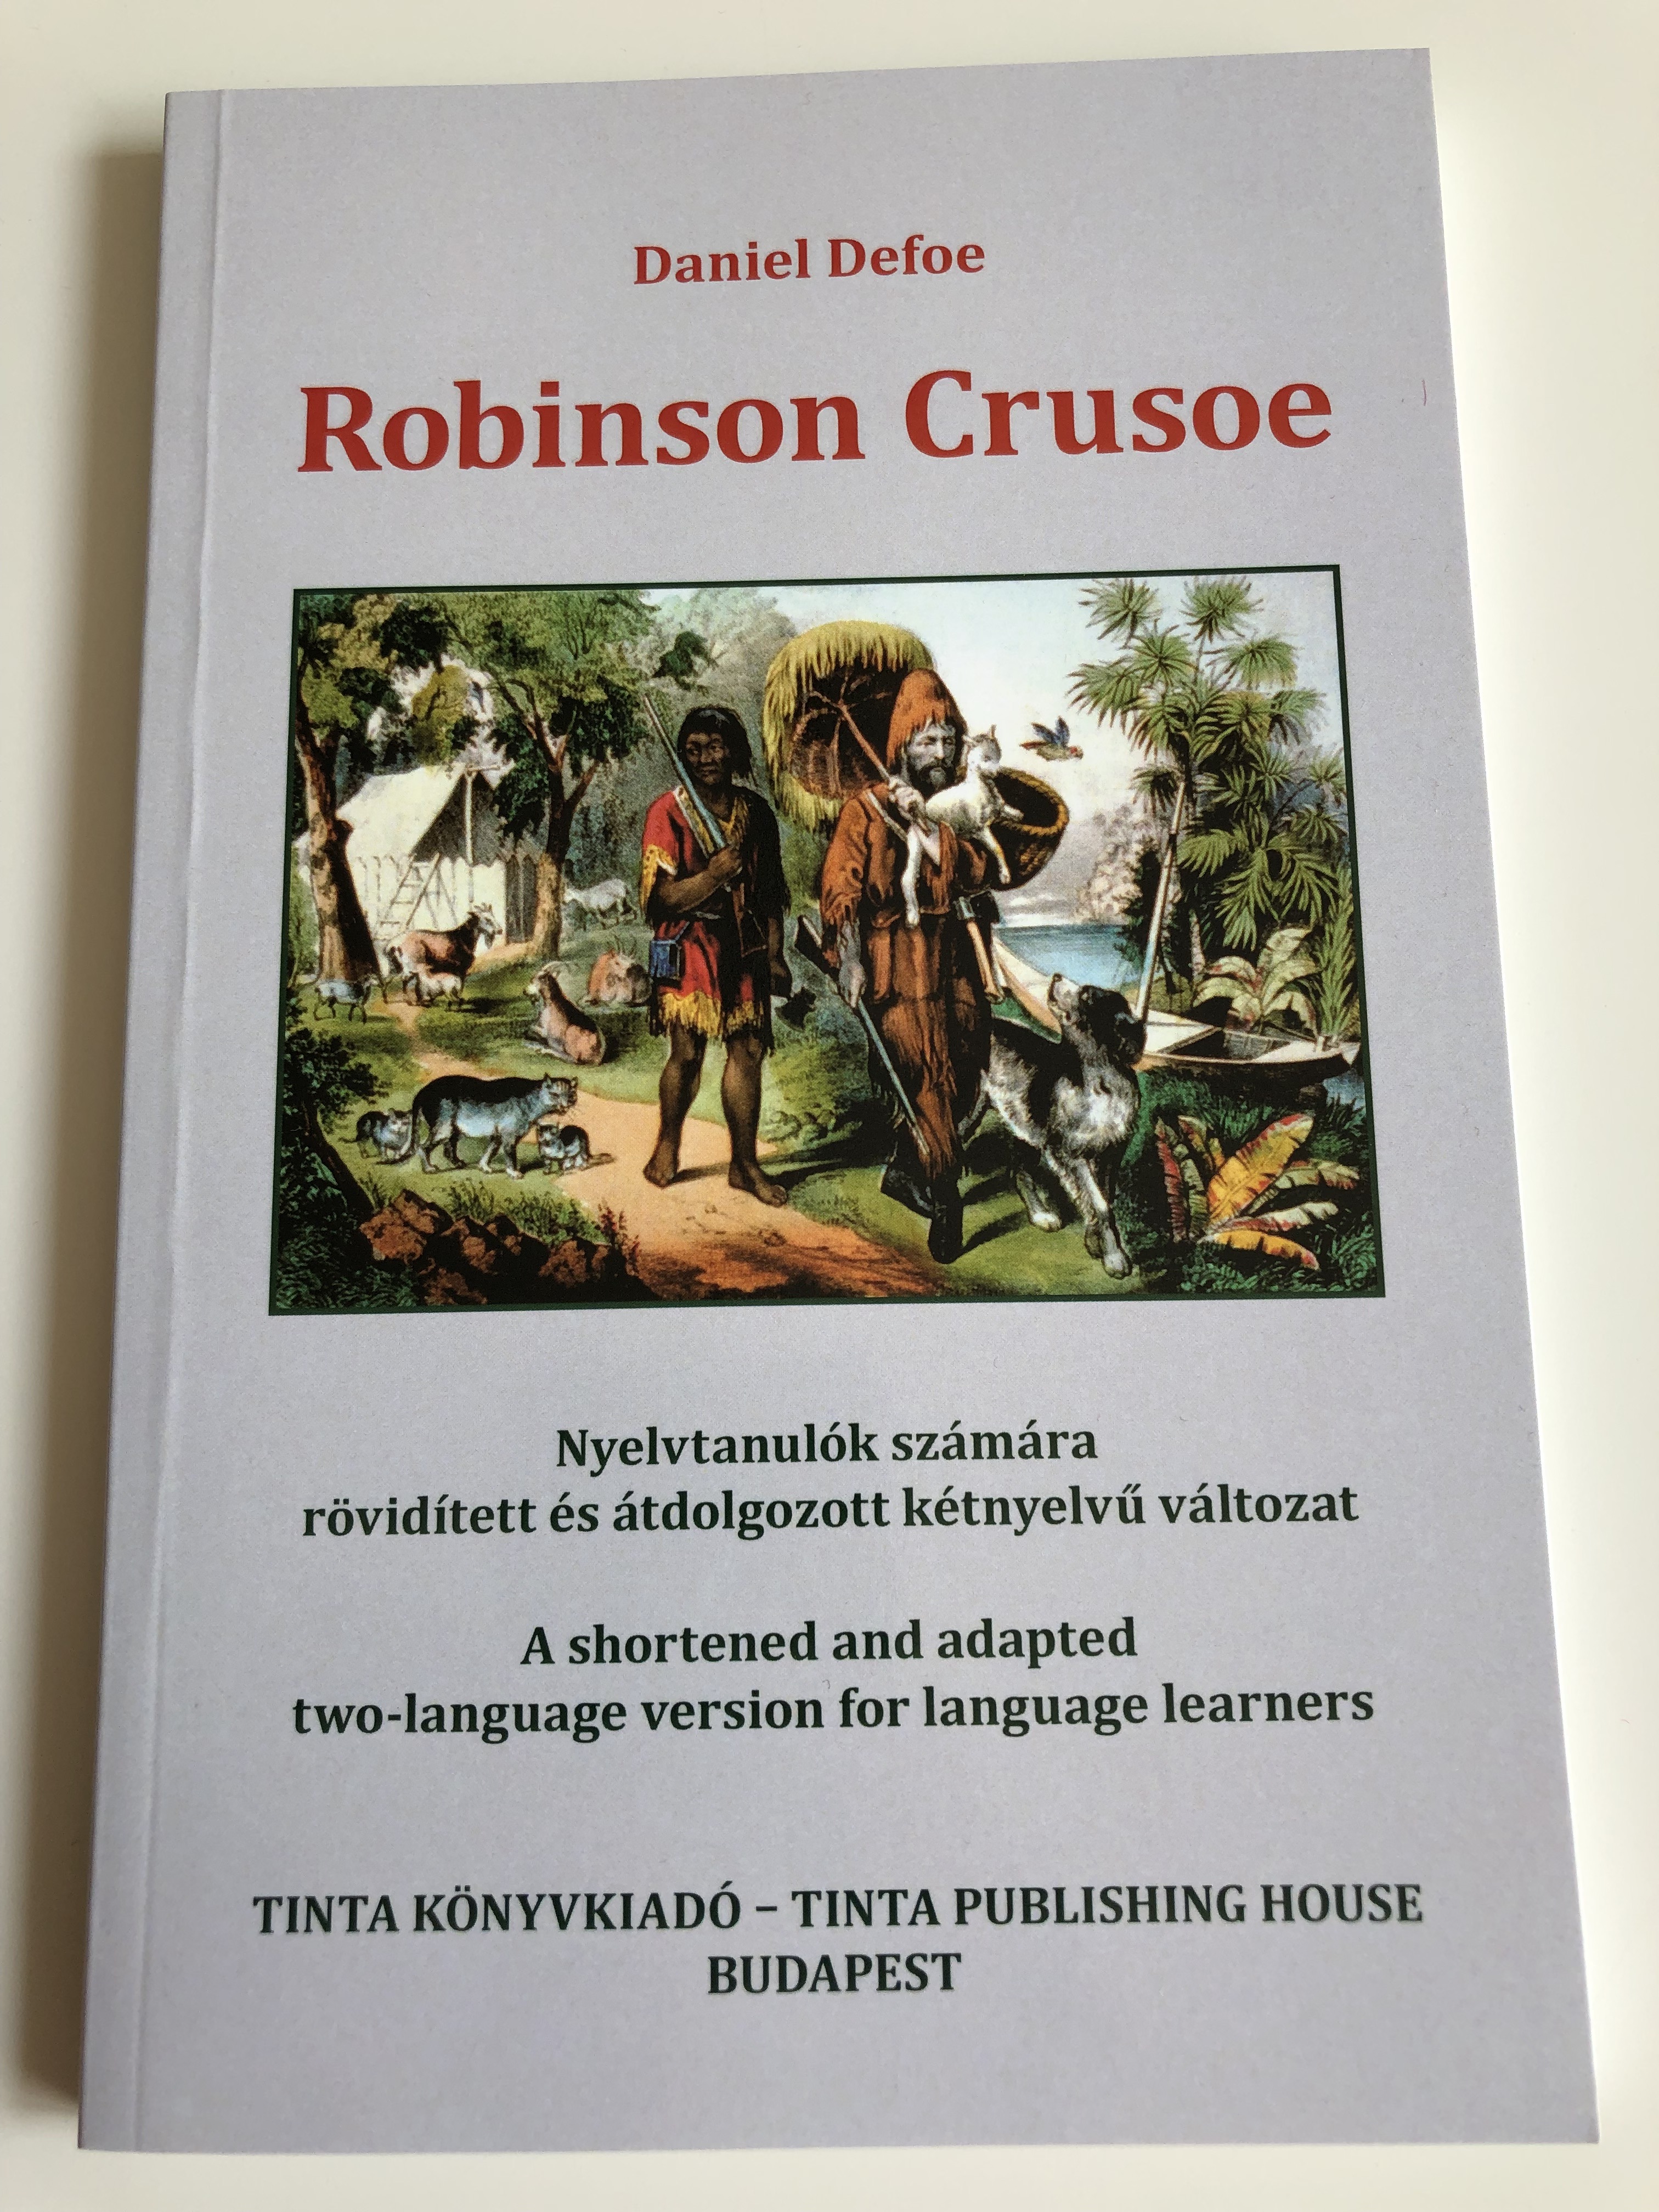 robinson-crusoe-by-daniel-defoe-a-shortened-and-adapted-bilingual-version-for-language-learners-hungarian-translation-sipos-j-lia-tinta-publishing-house-2013-1-.jpg